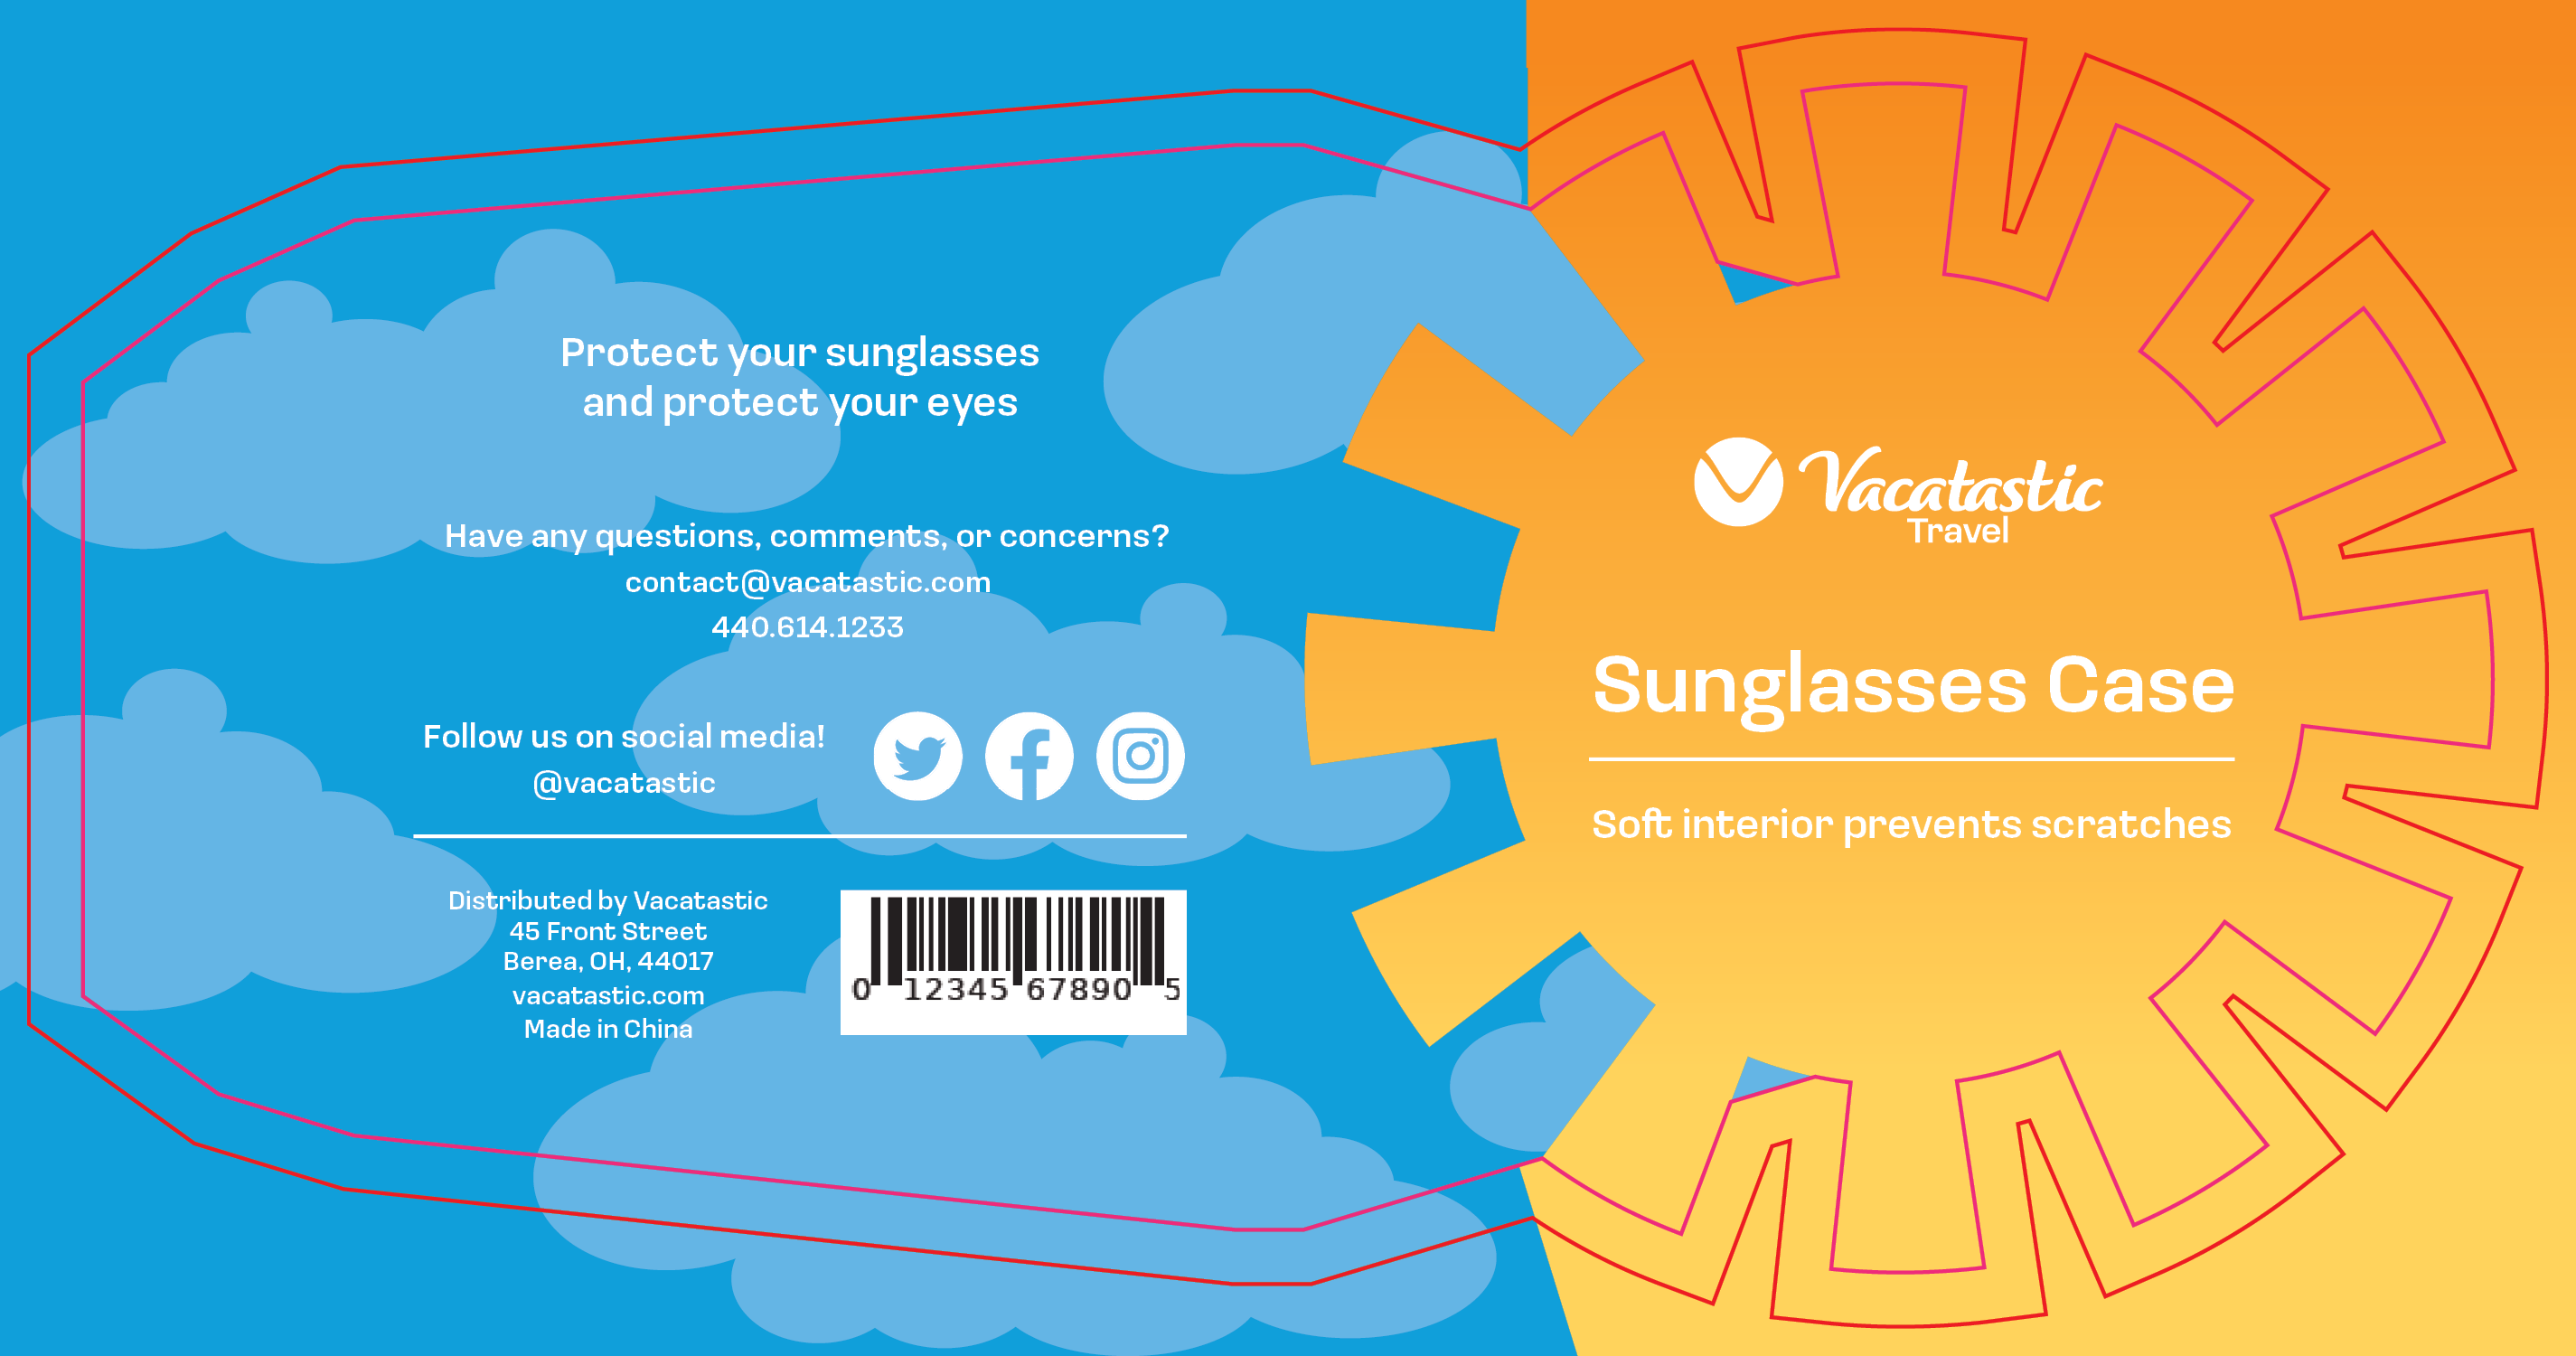 Second version of sunglasses case